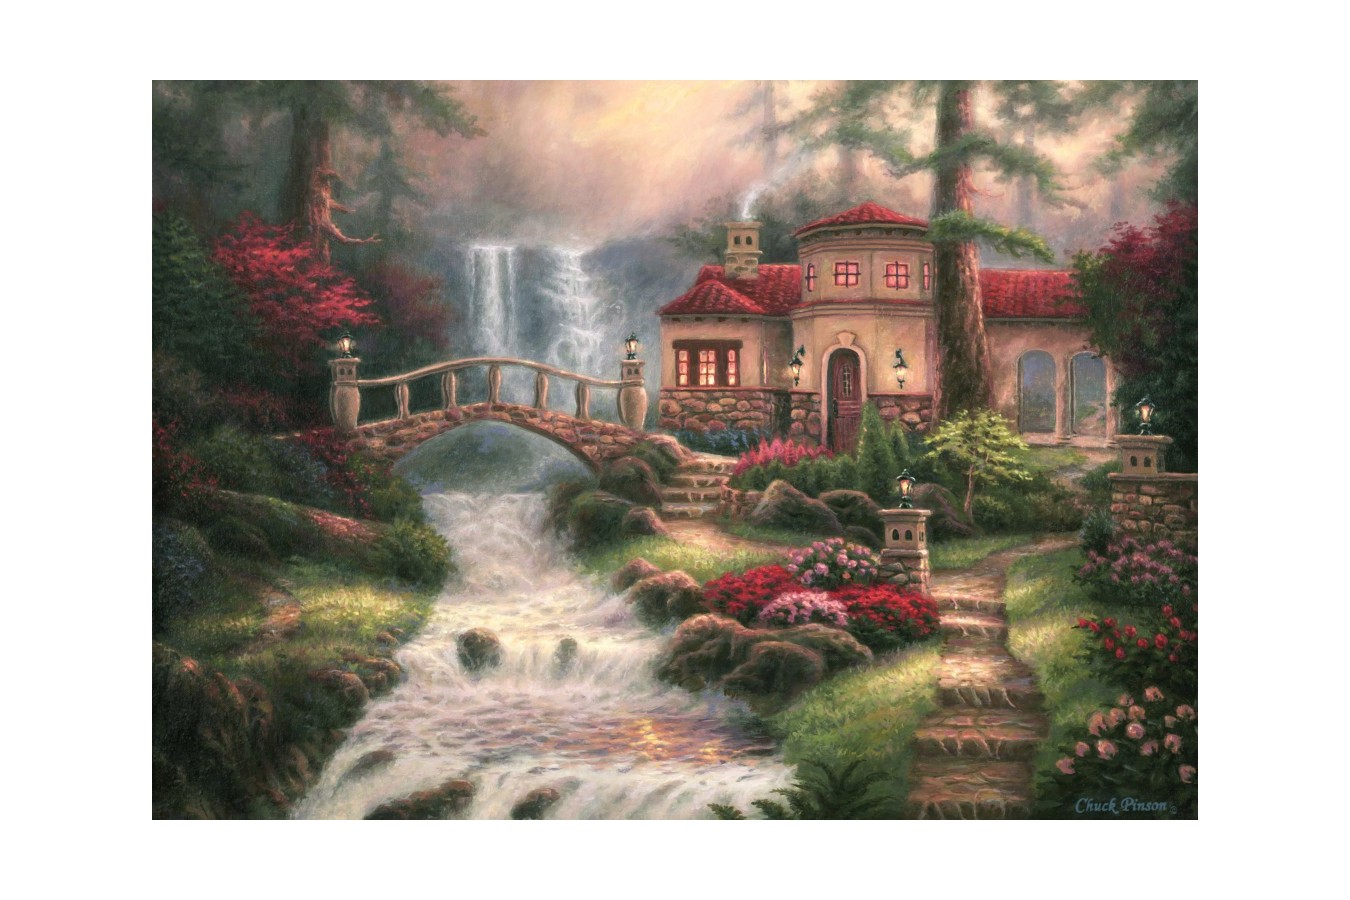 Puzzle Grafika - Chuck Pinson: Sierra River Falls, 2000 piese (63124)